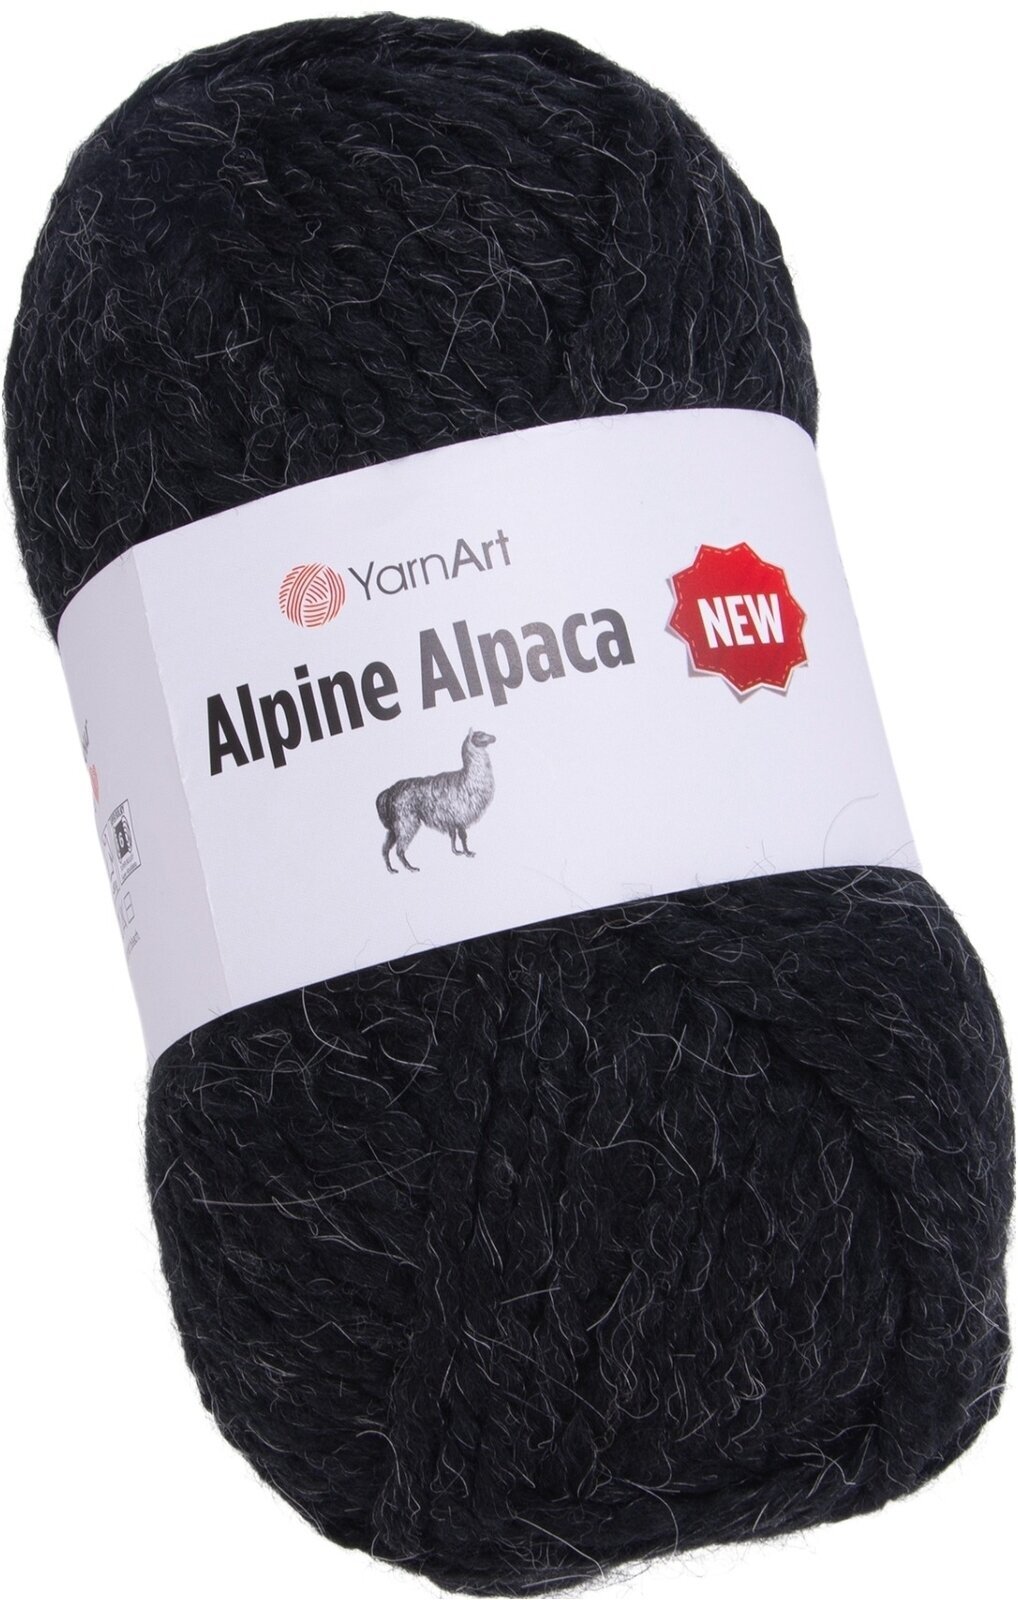 Knitting Yarn Yarn Art Alpine Alpaca Knitting Yarn 1439